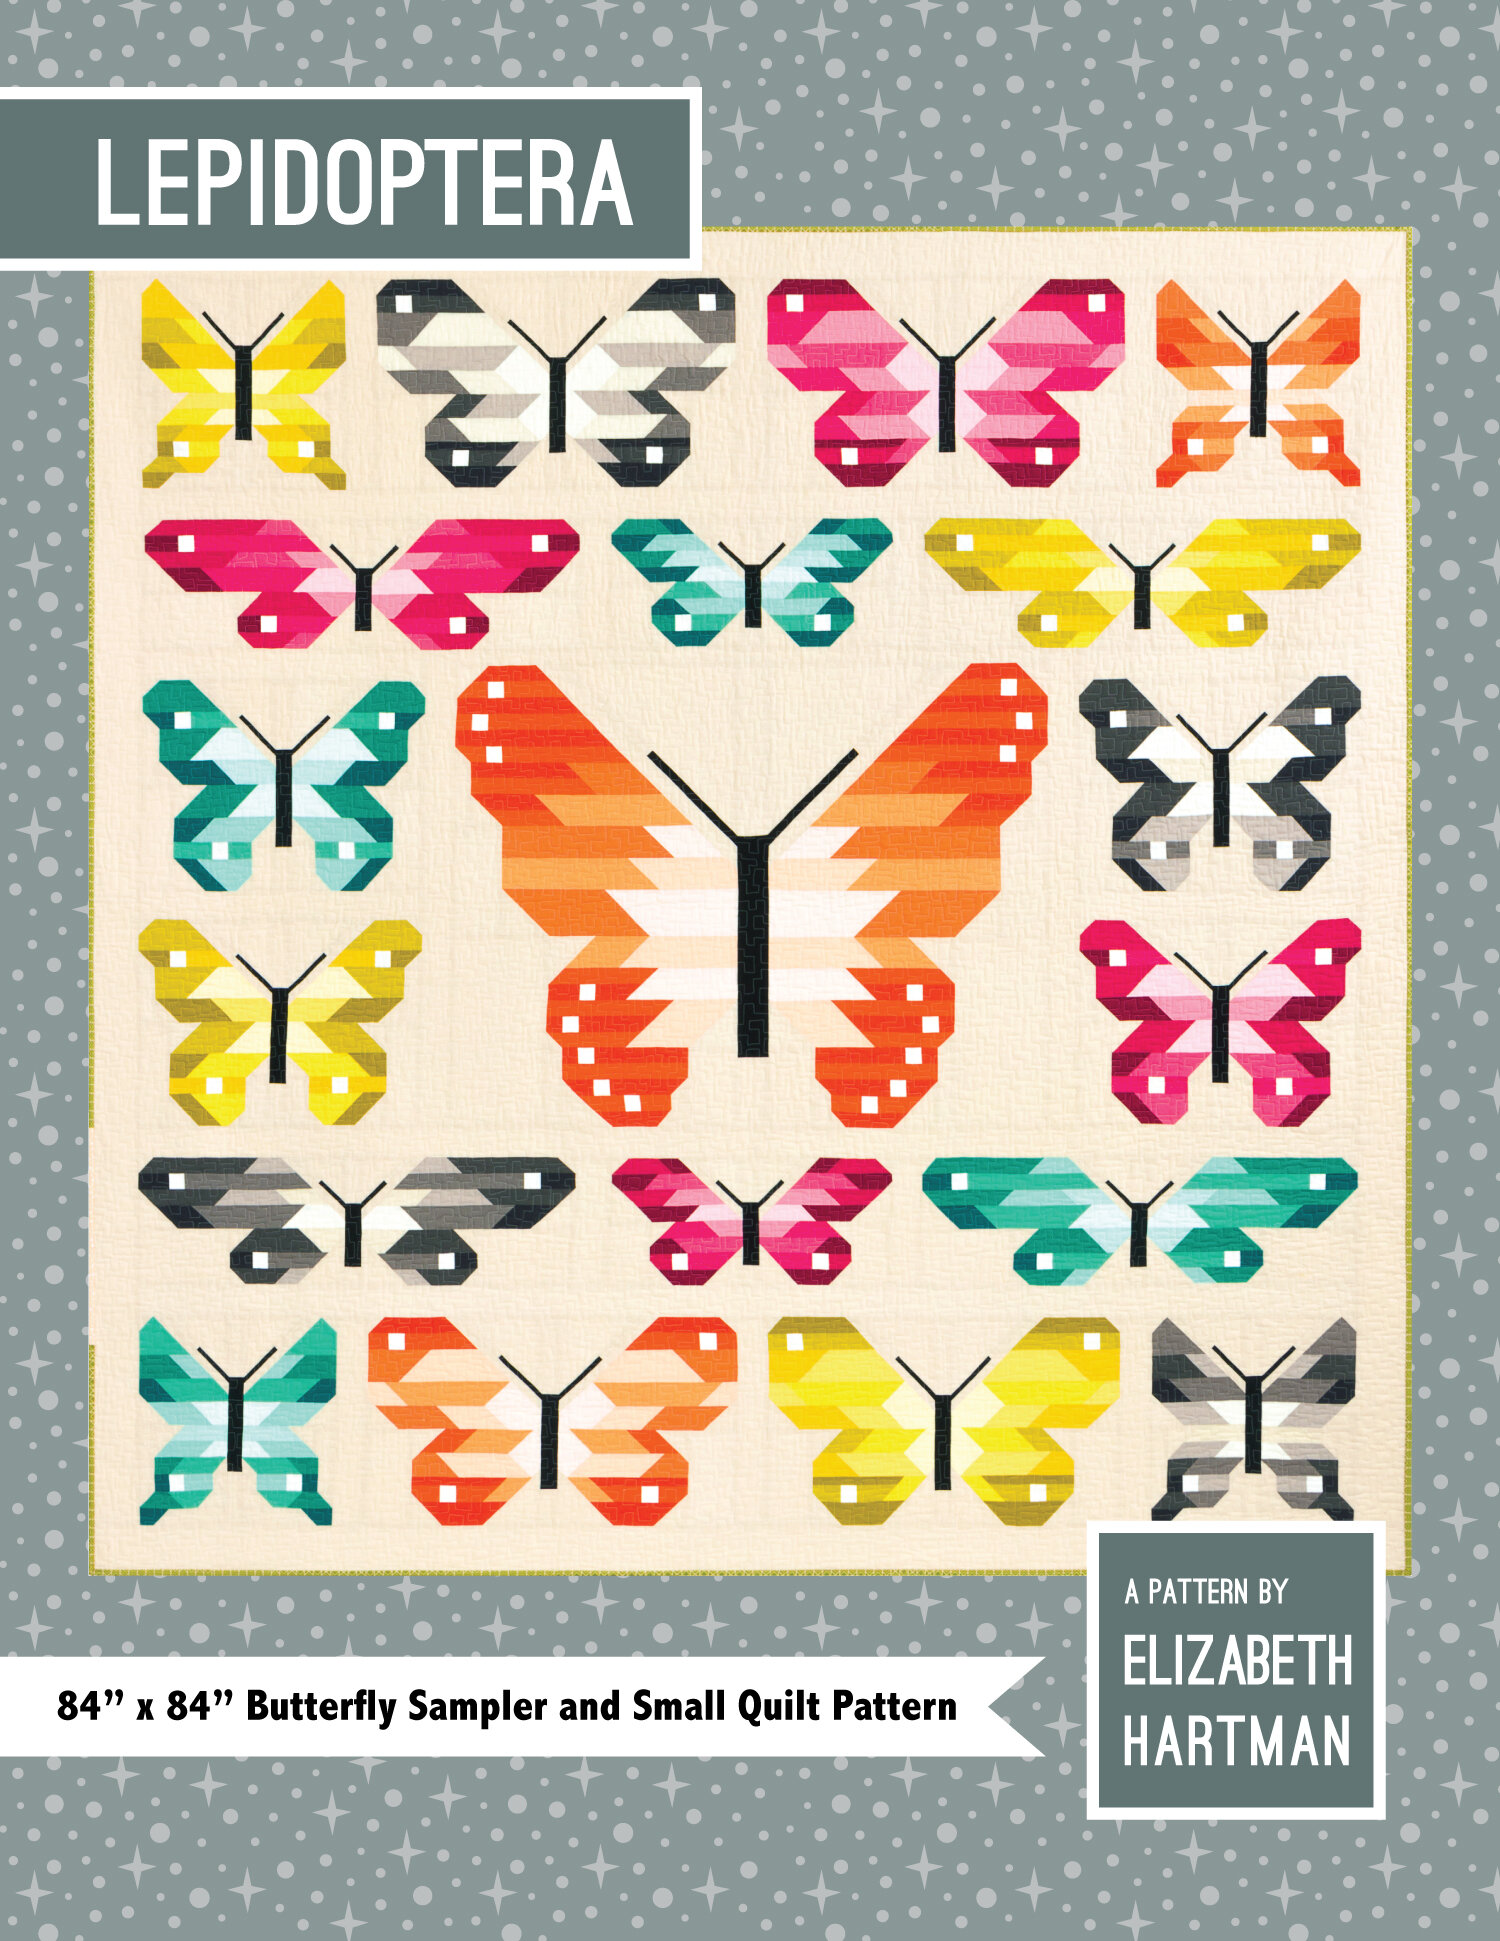 EH027-Lepidoptera-2-Cover.jpg